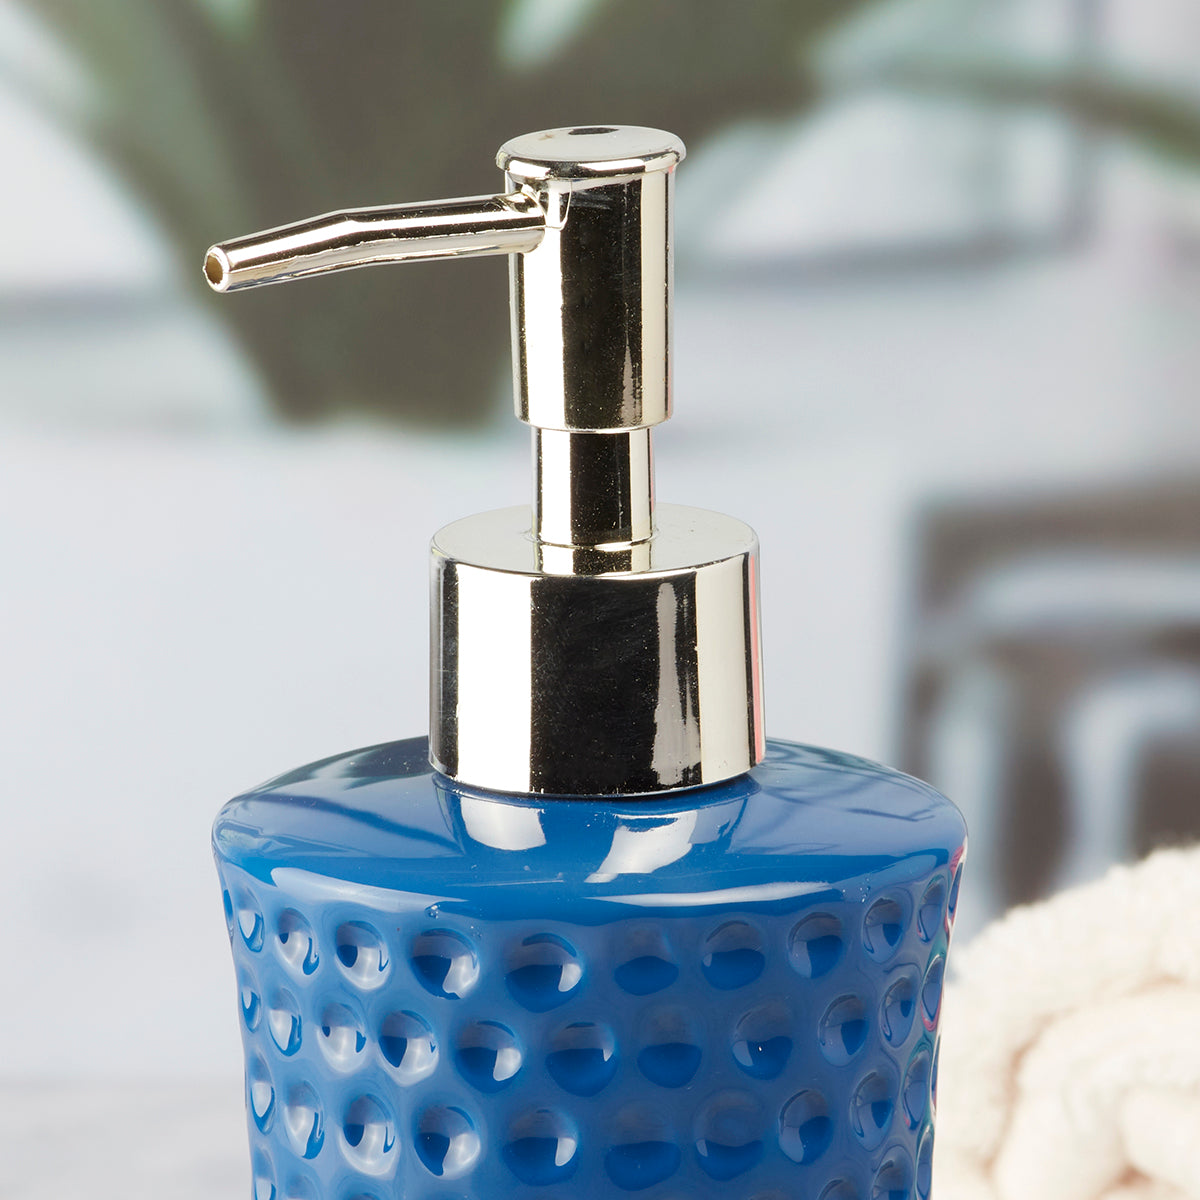 Ceramic Soap Dispenser handwash Pump for Bathroom, Set of 1, Blue (8038)